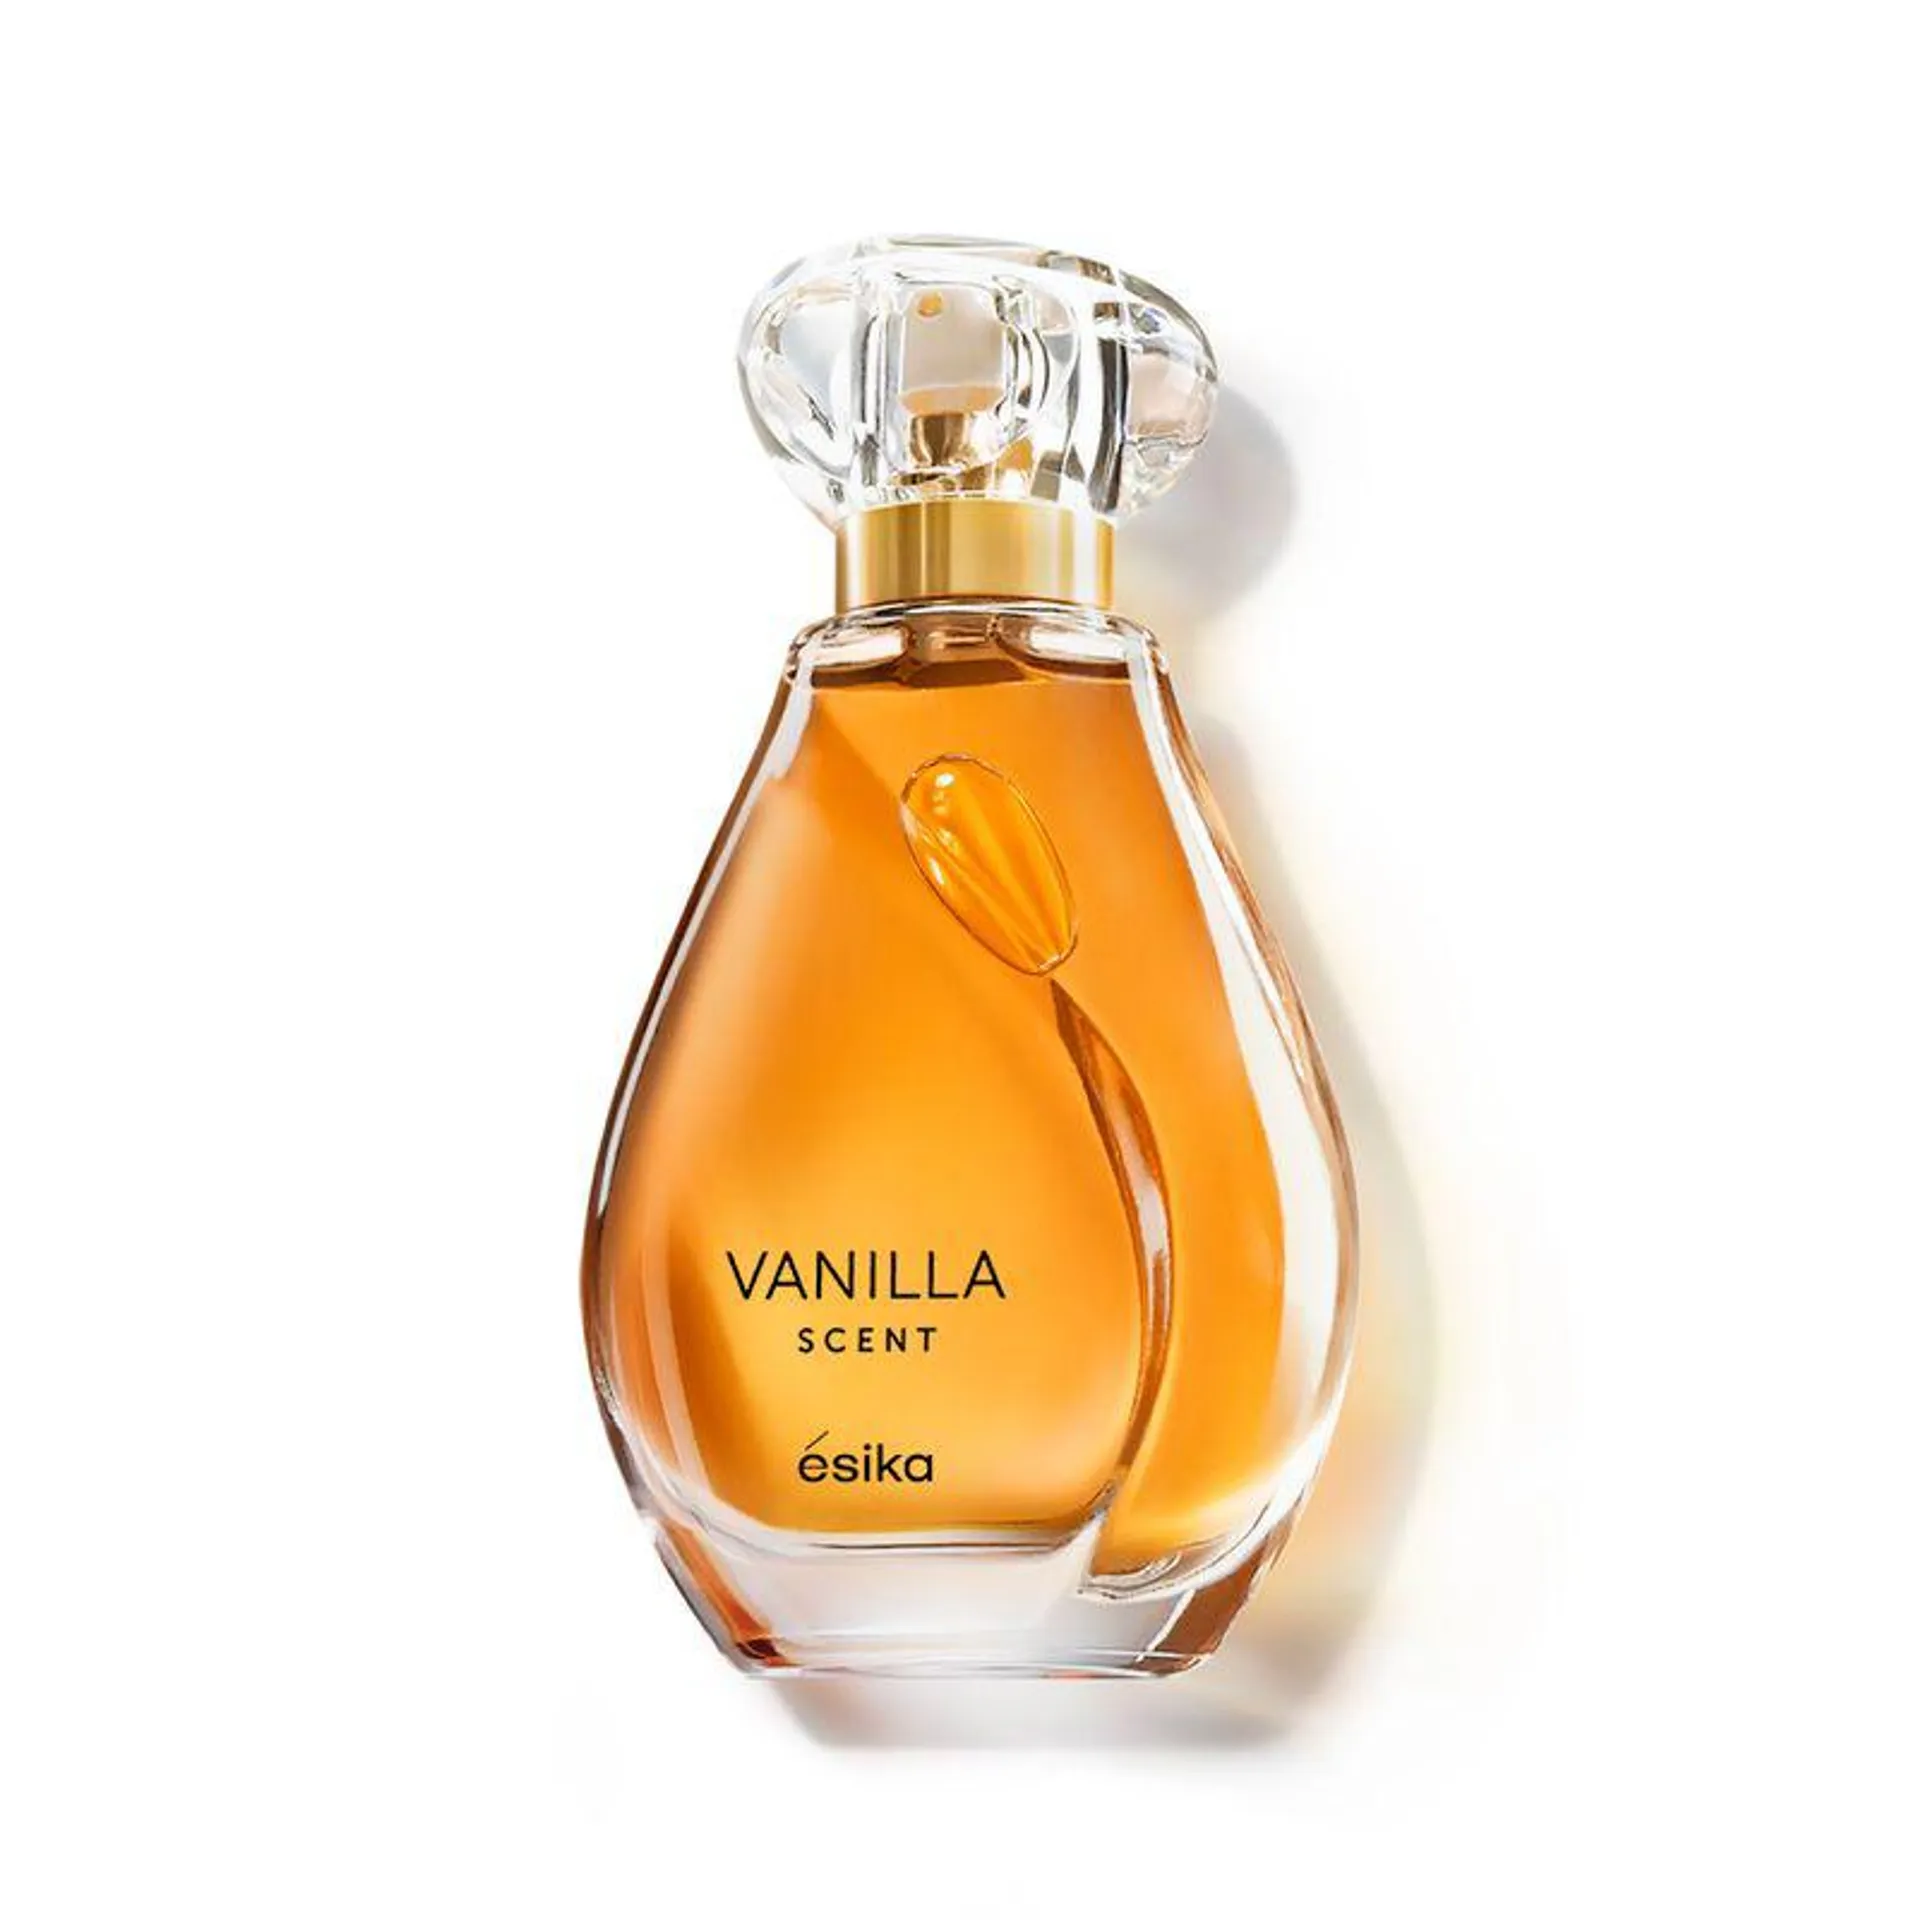 Vanilla Scent Eau de Parfum, 75 ml